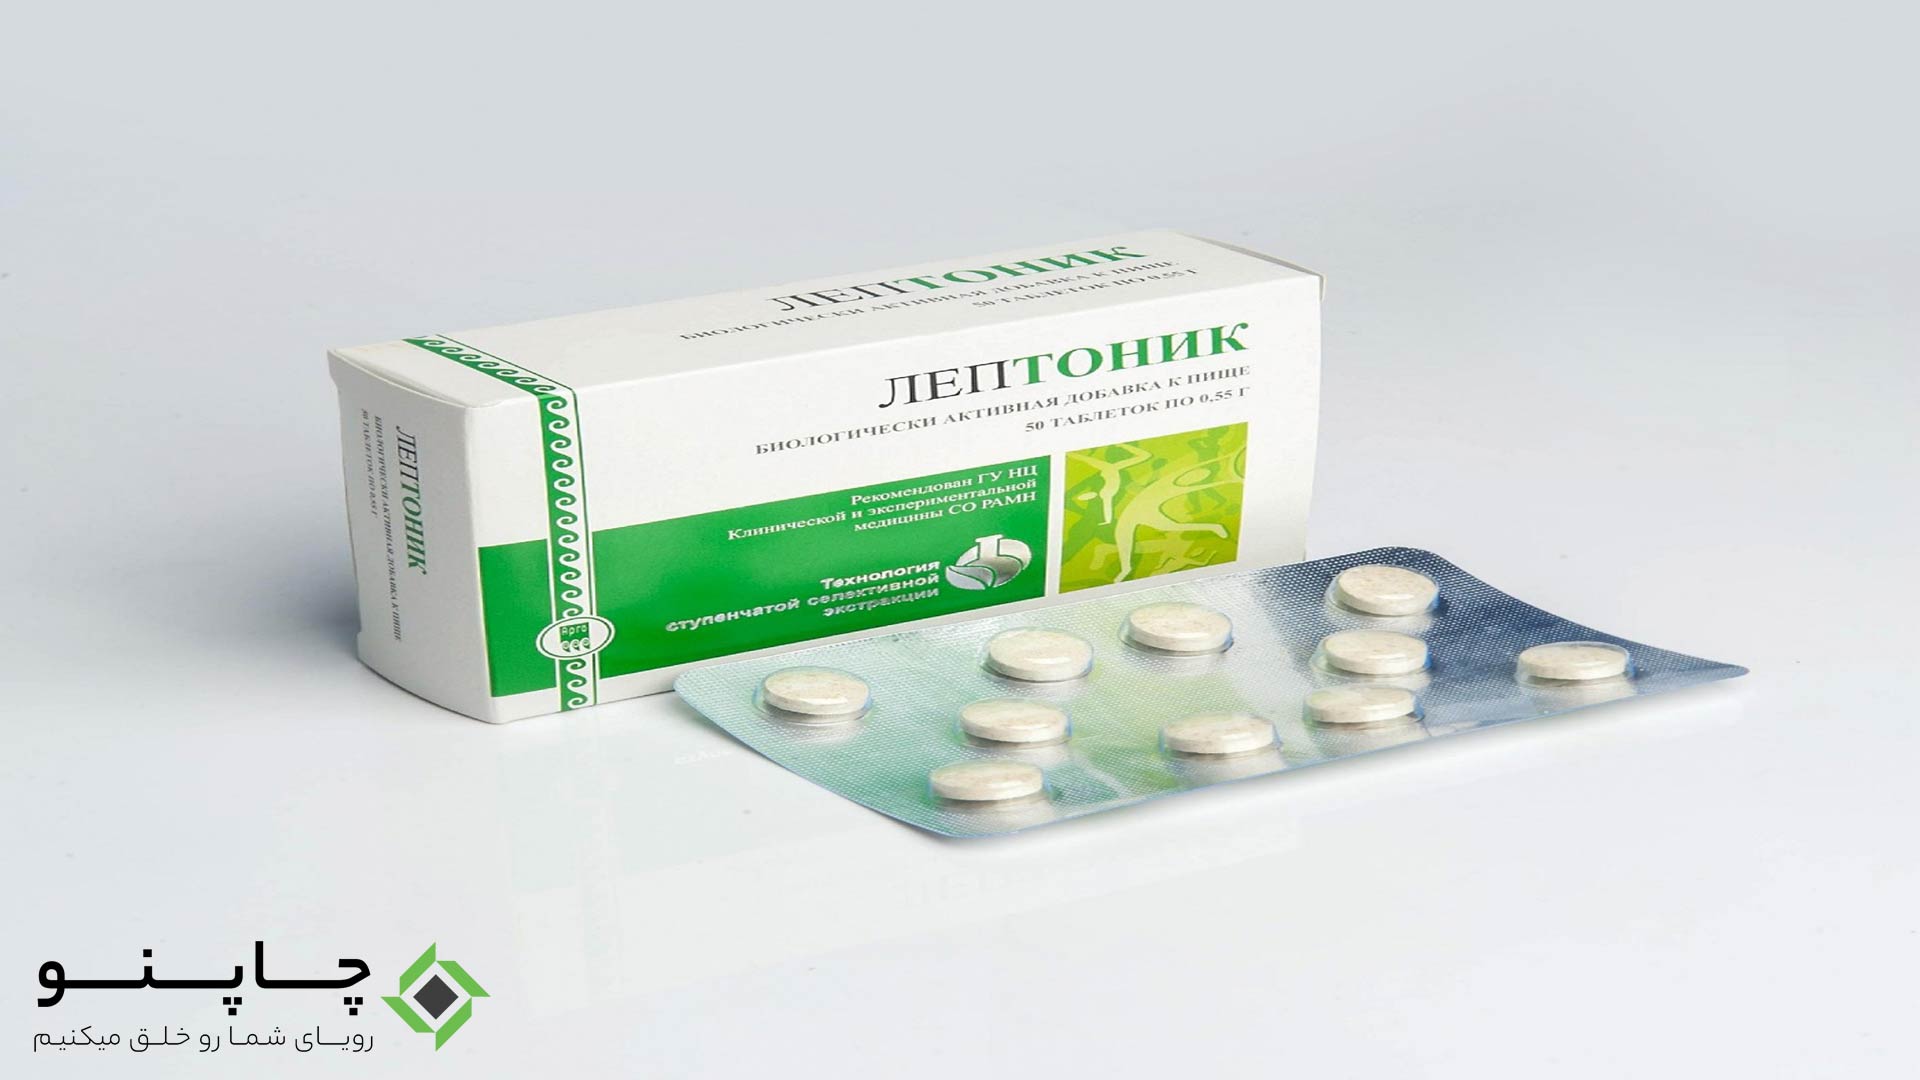 Professional Drug Green Packaging